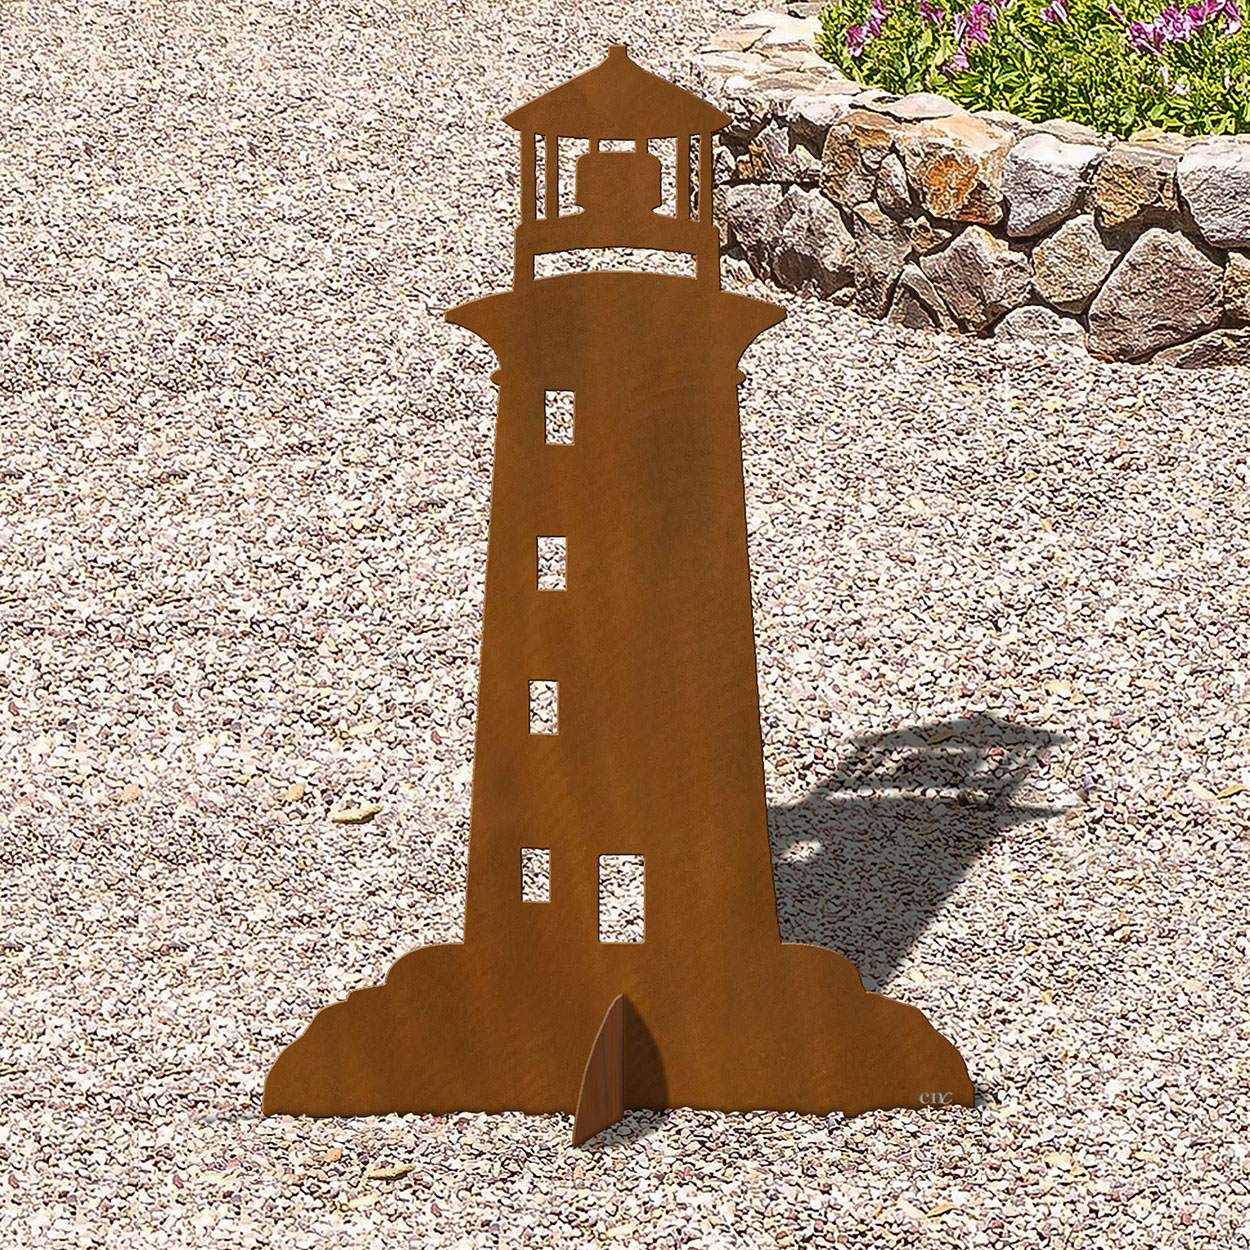 603218 - 42in H Lighthouse Large Garden Statue Yard Art